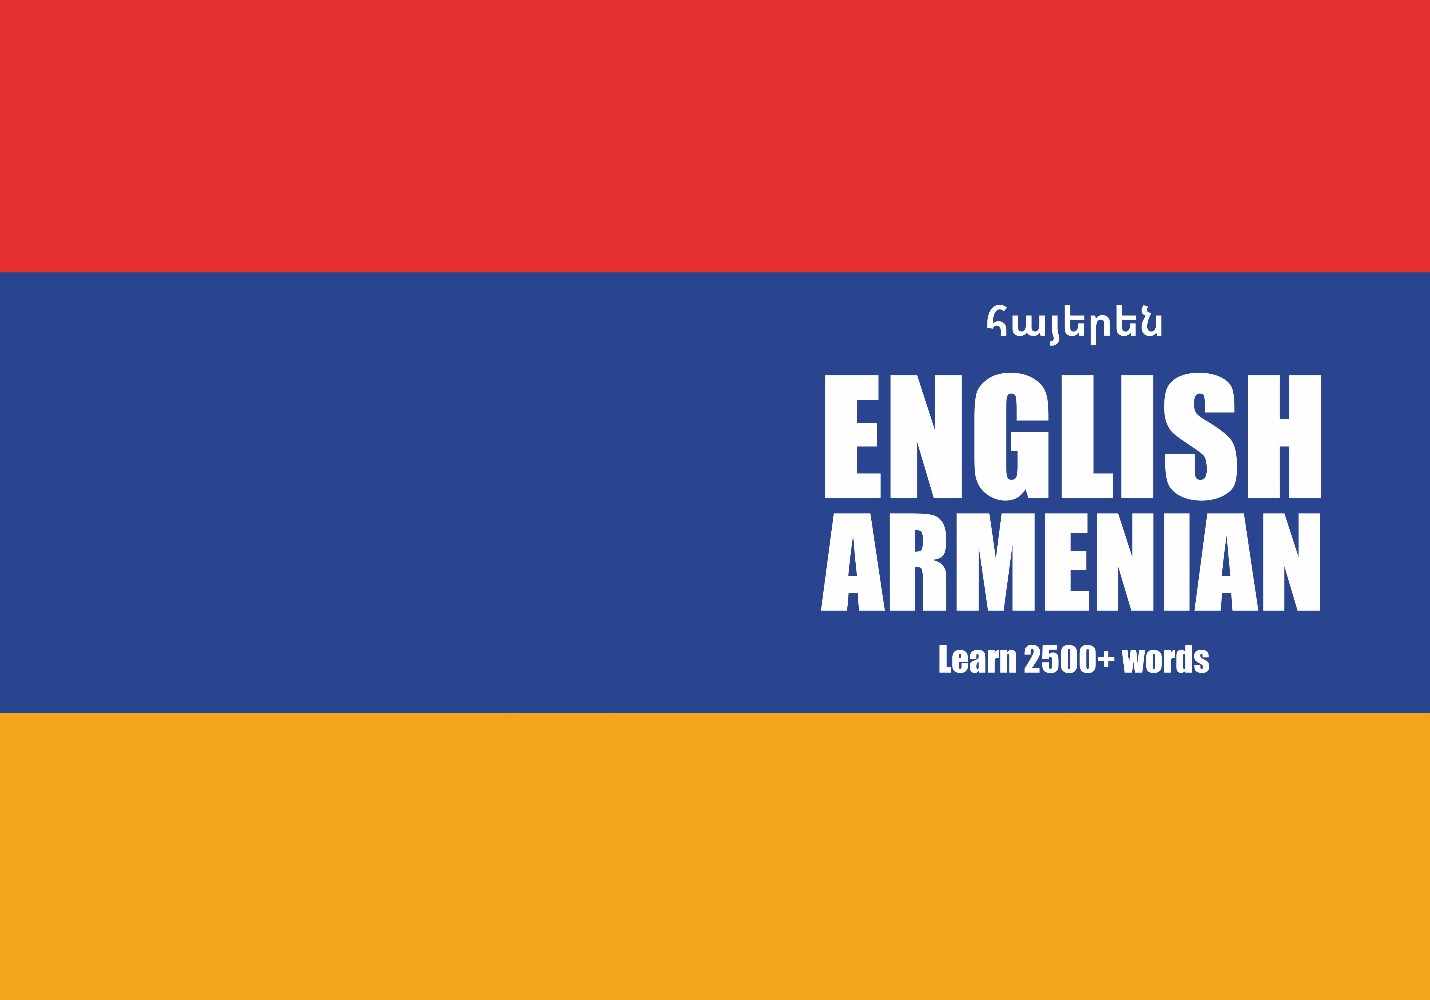 Learn Armenian: Greetings and Farewells in Armenian 